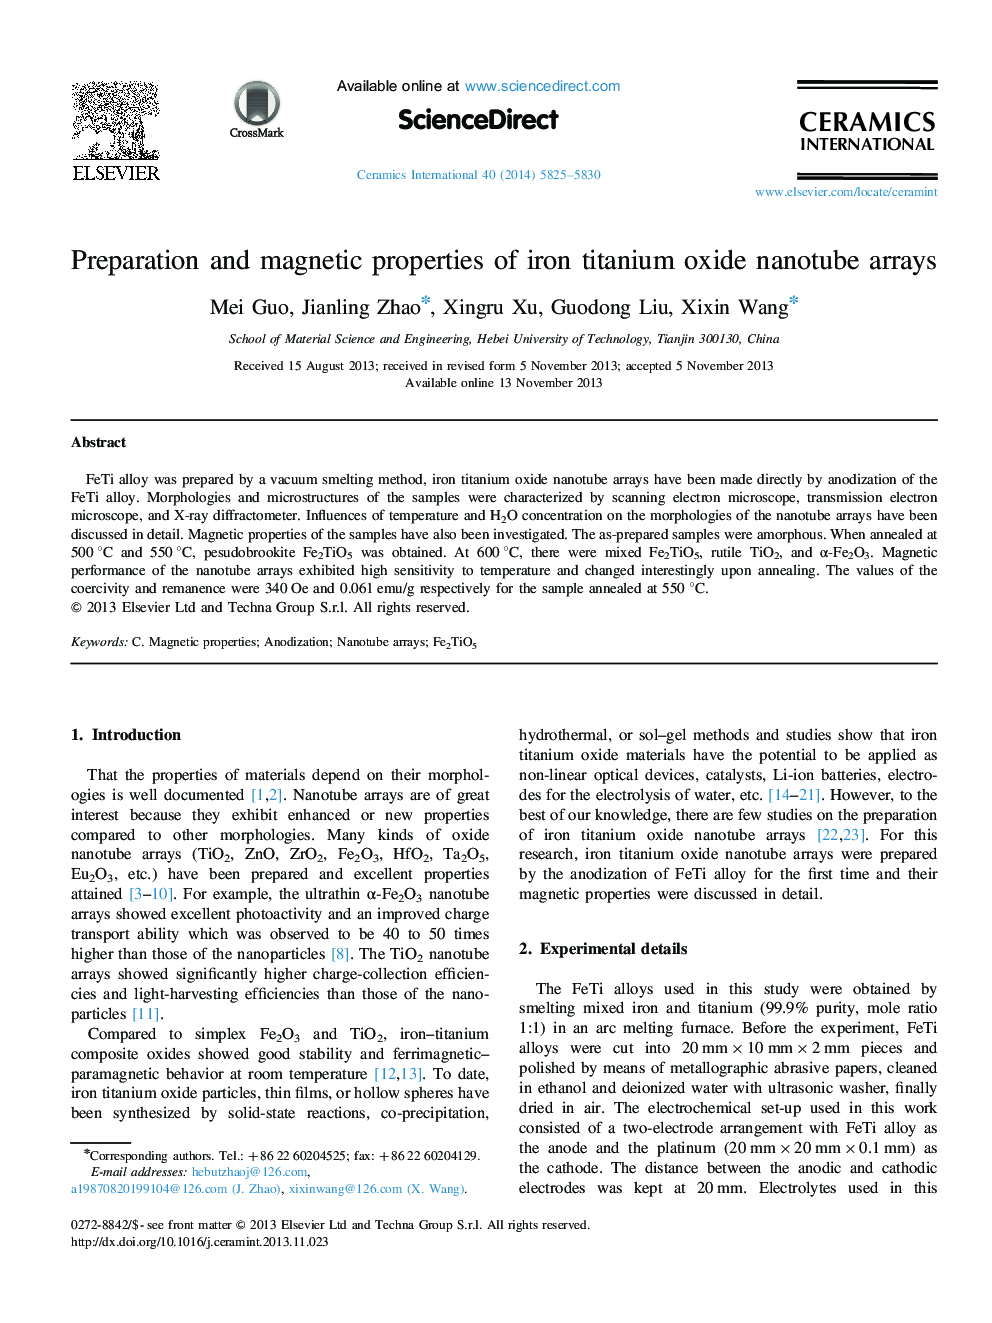 Preparation and magnetic properties of iron titanium oxide nanotube arrays